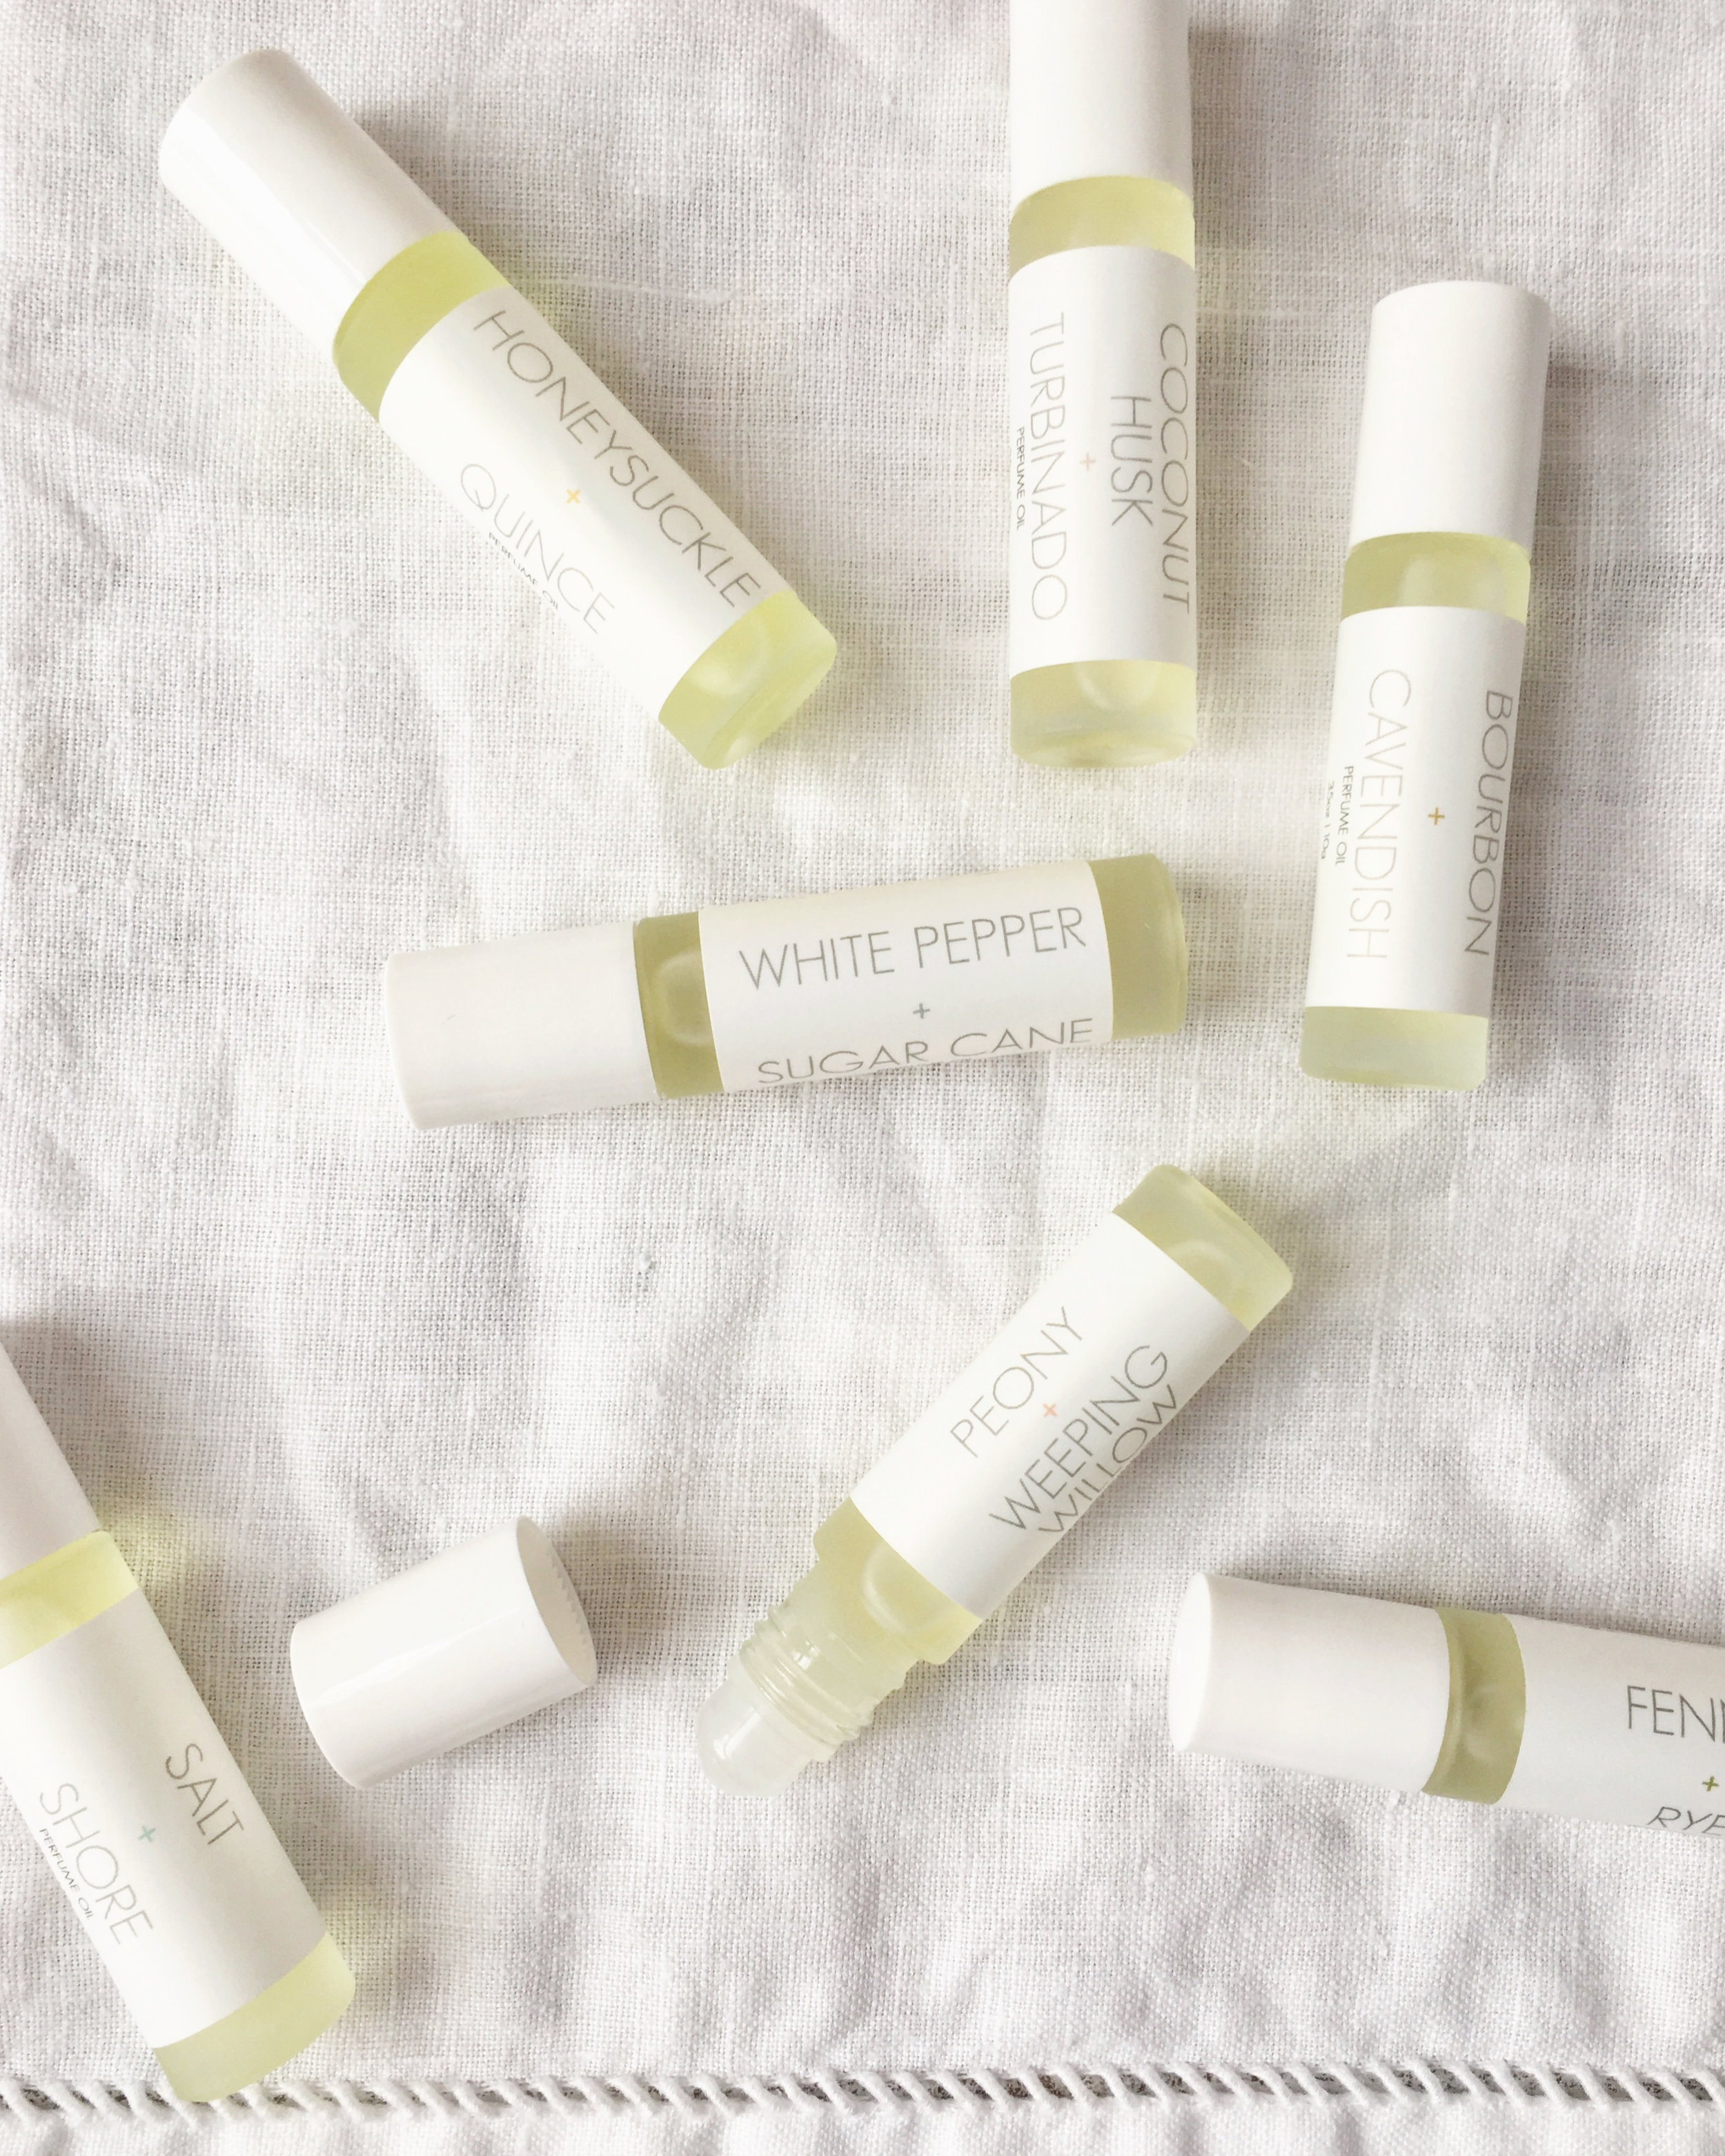 RICA bath + body Roll-on Perfume Assorted on White Napkin 3.jpg